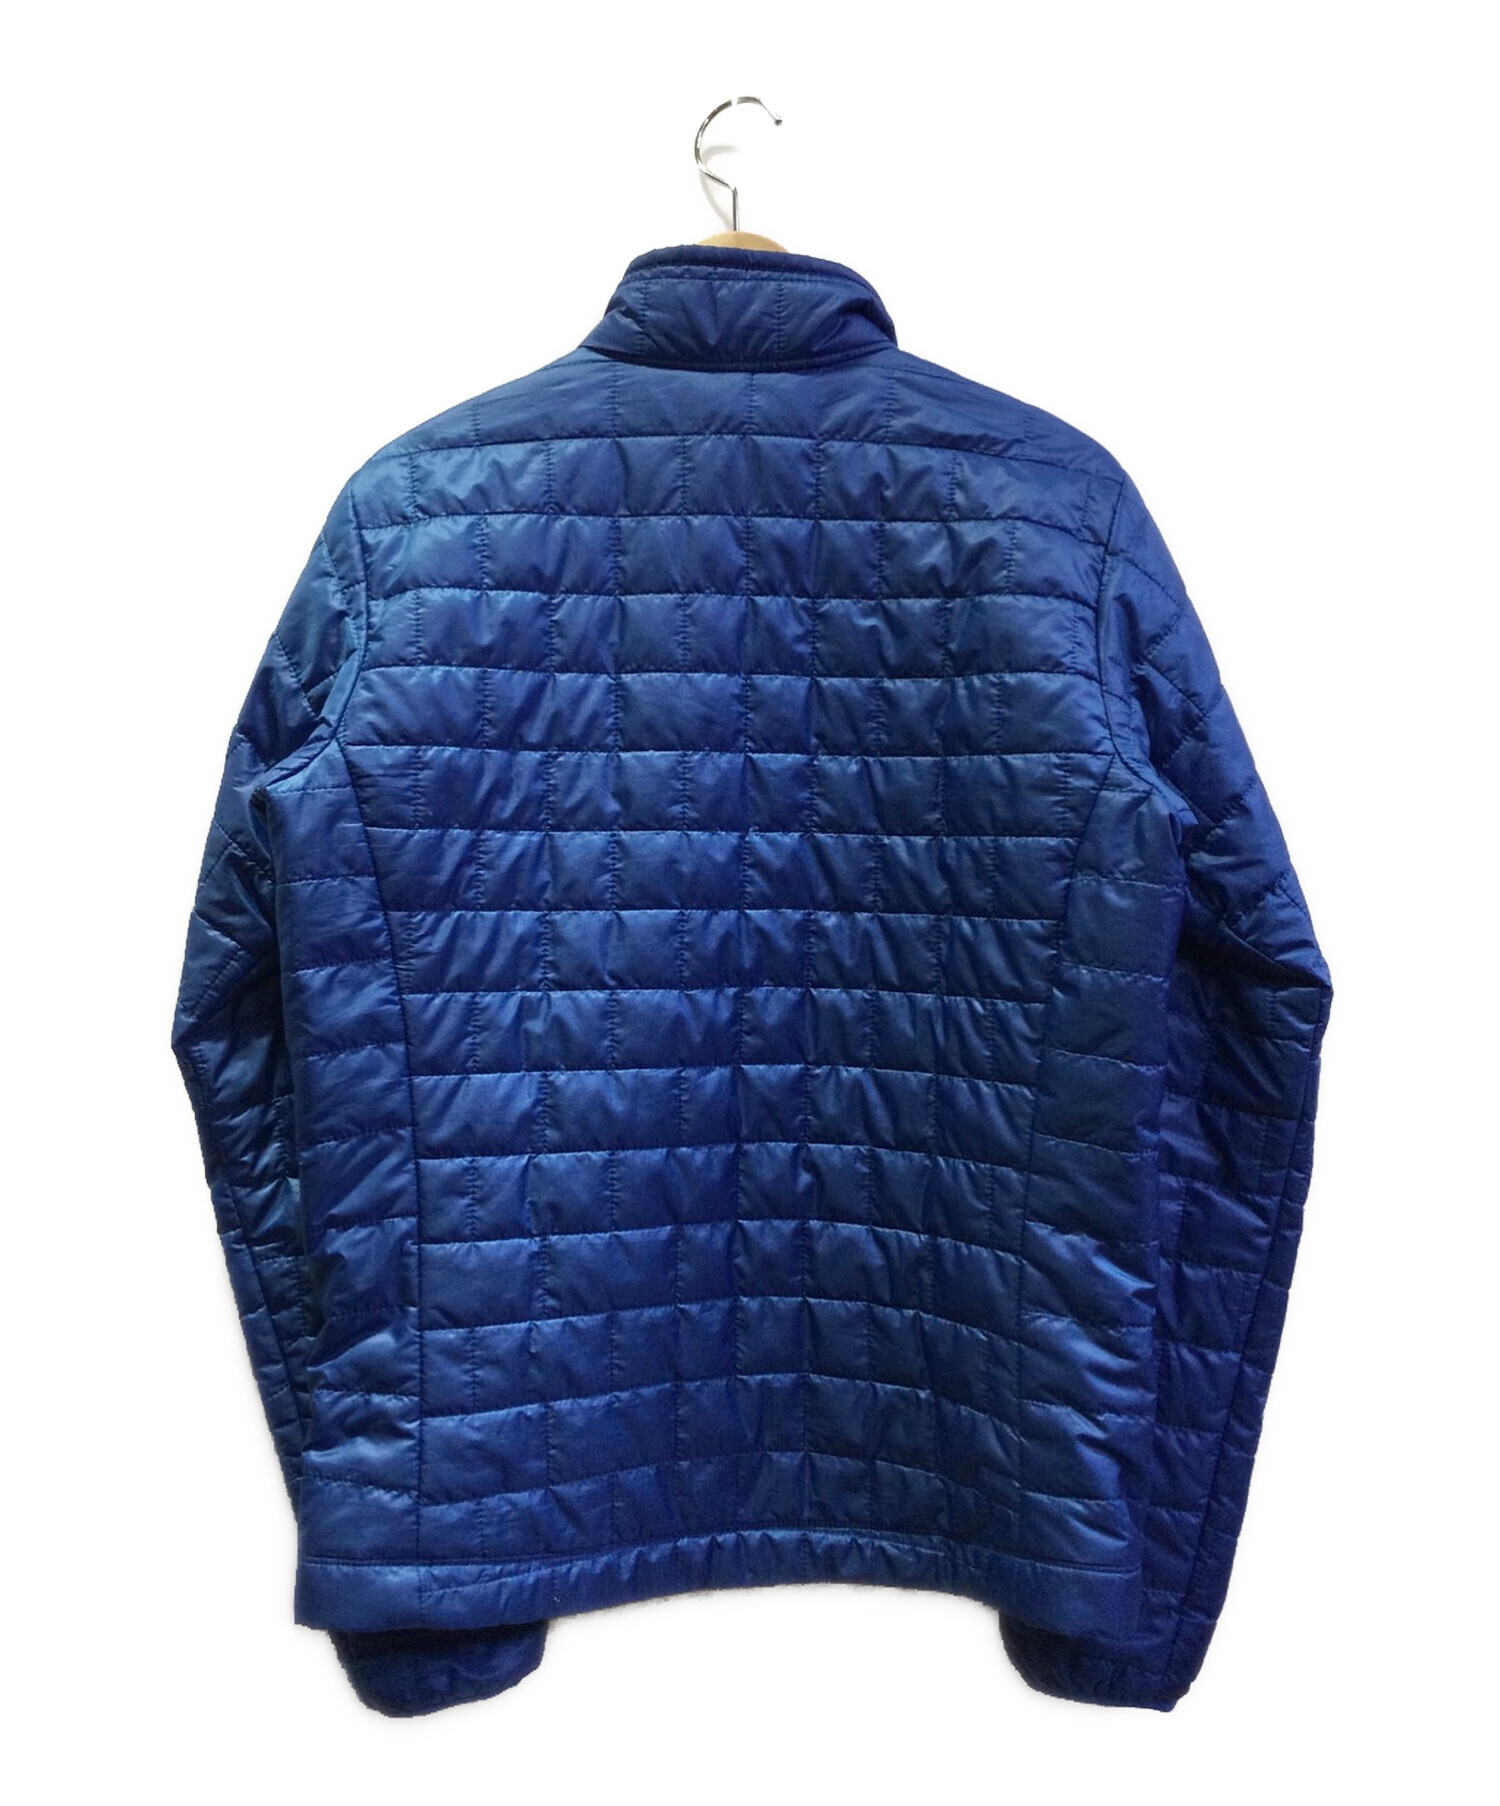 Patagonia (パタゴニア) ナノパフジャケット ブルー サイズ:S